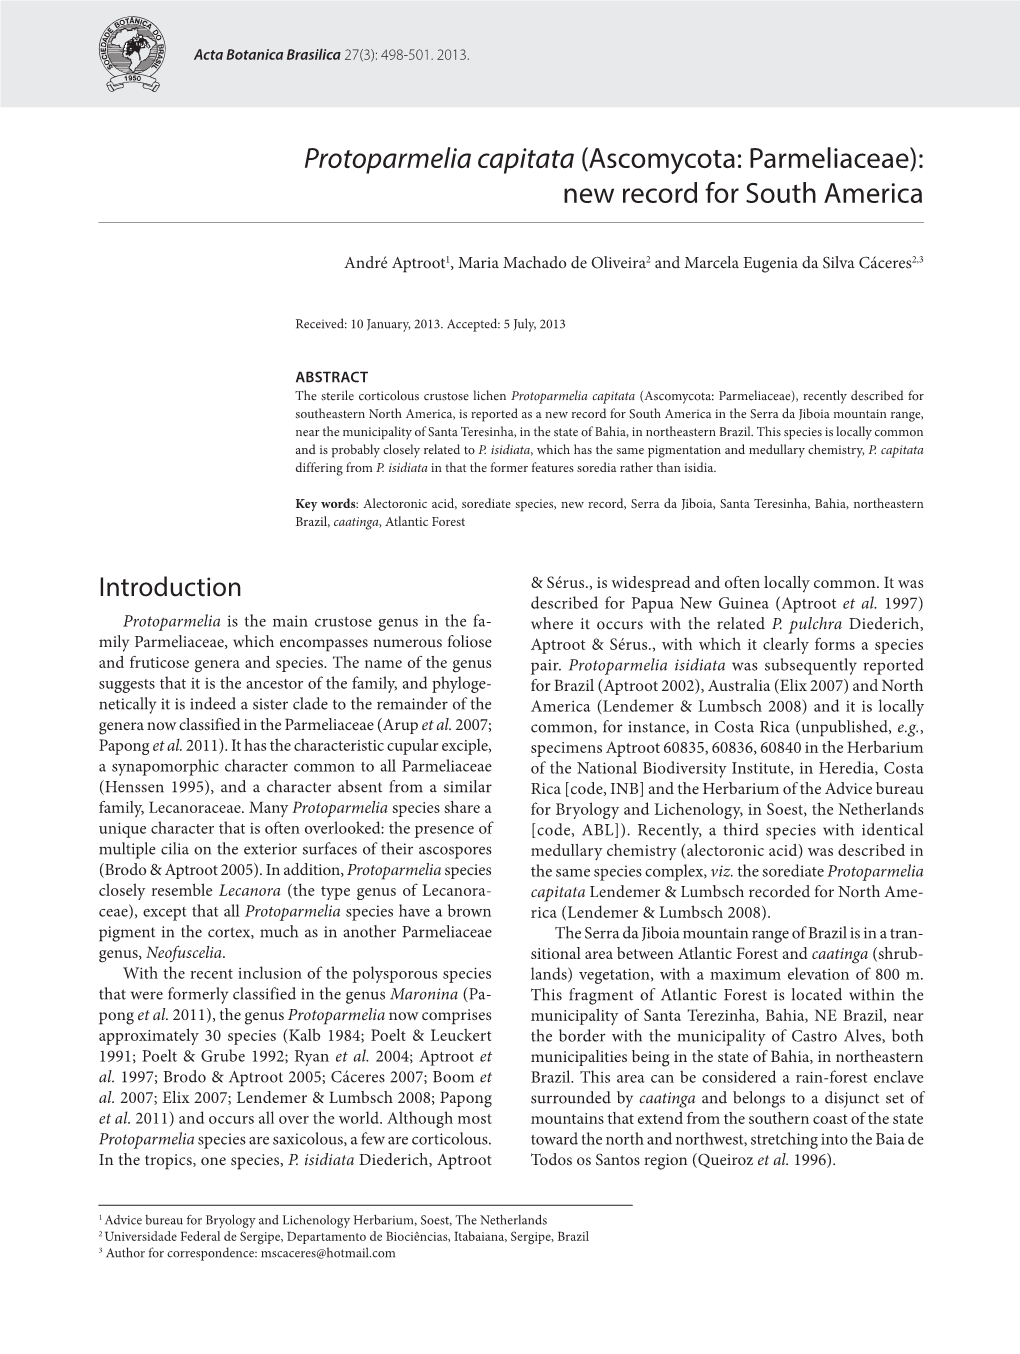 Protoparmelia Capitata (Ascomycota: Parmeliaceae): New Record for South America